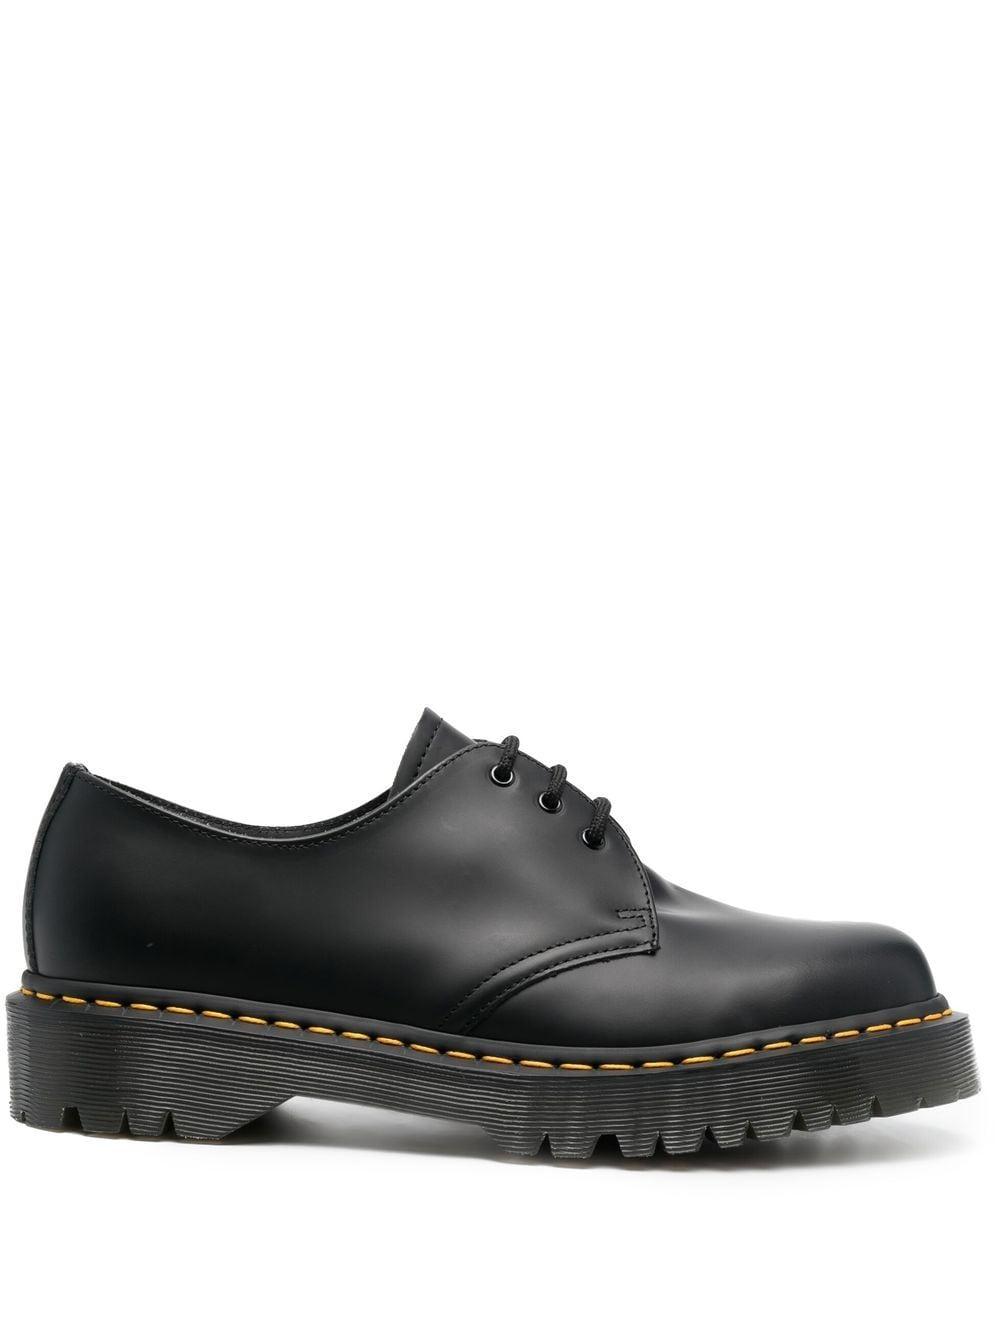 Dr. Martens 1461 Bex Leather Derby Shoes in Black for Men - Save 26% ...